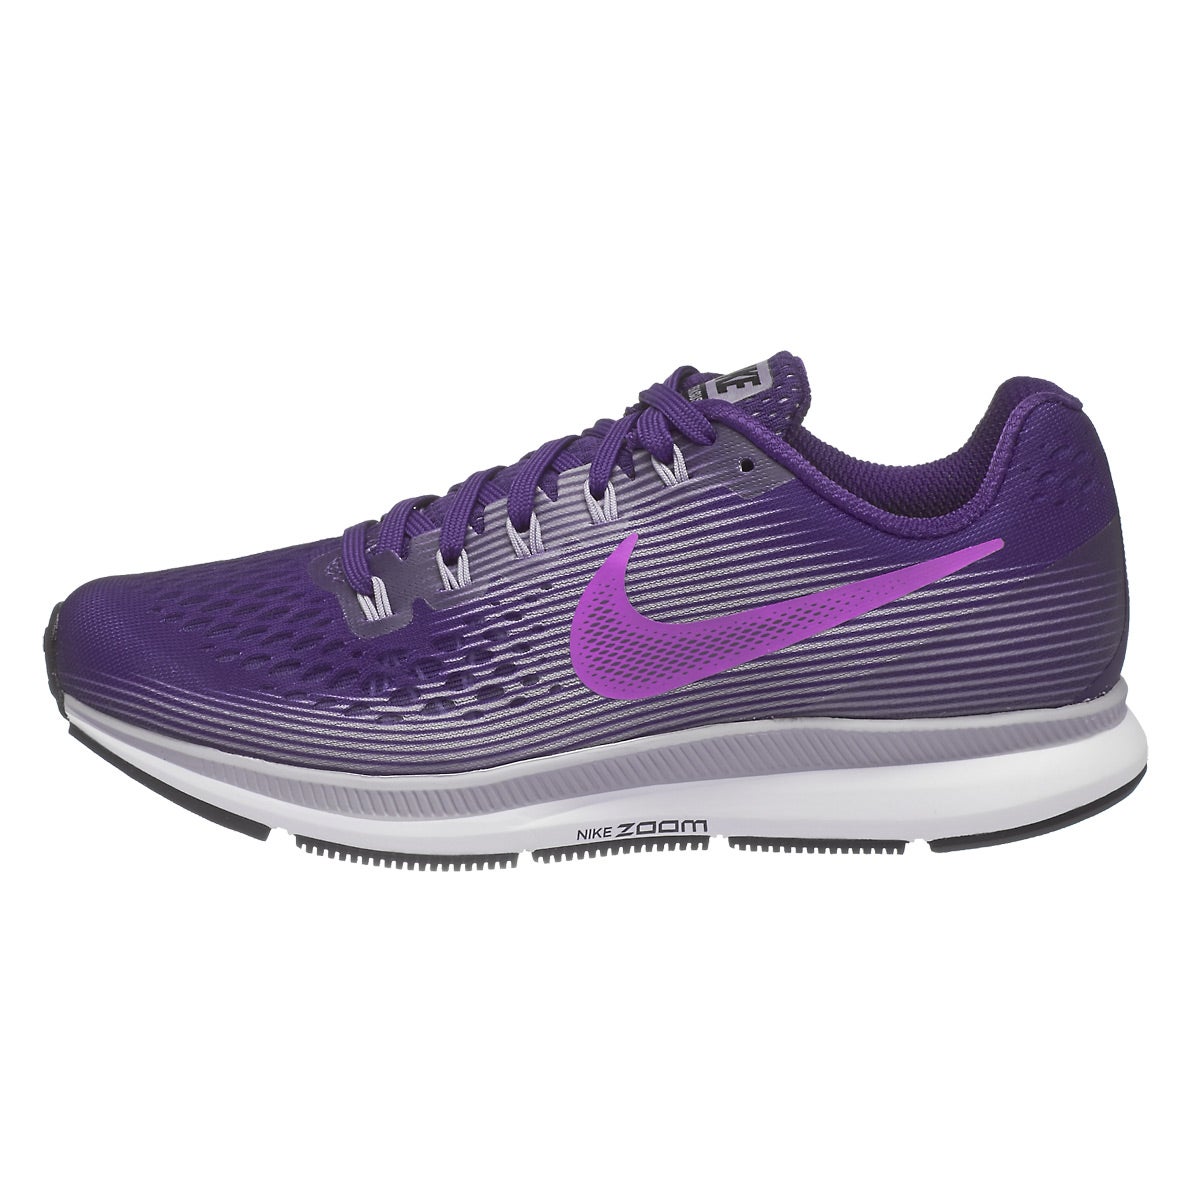 Nike Zoom Pegasus 34 Women's Shoes Ink/Hyper Violet 360° View | Running